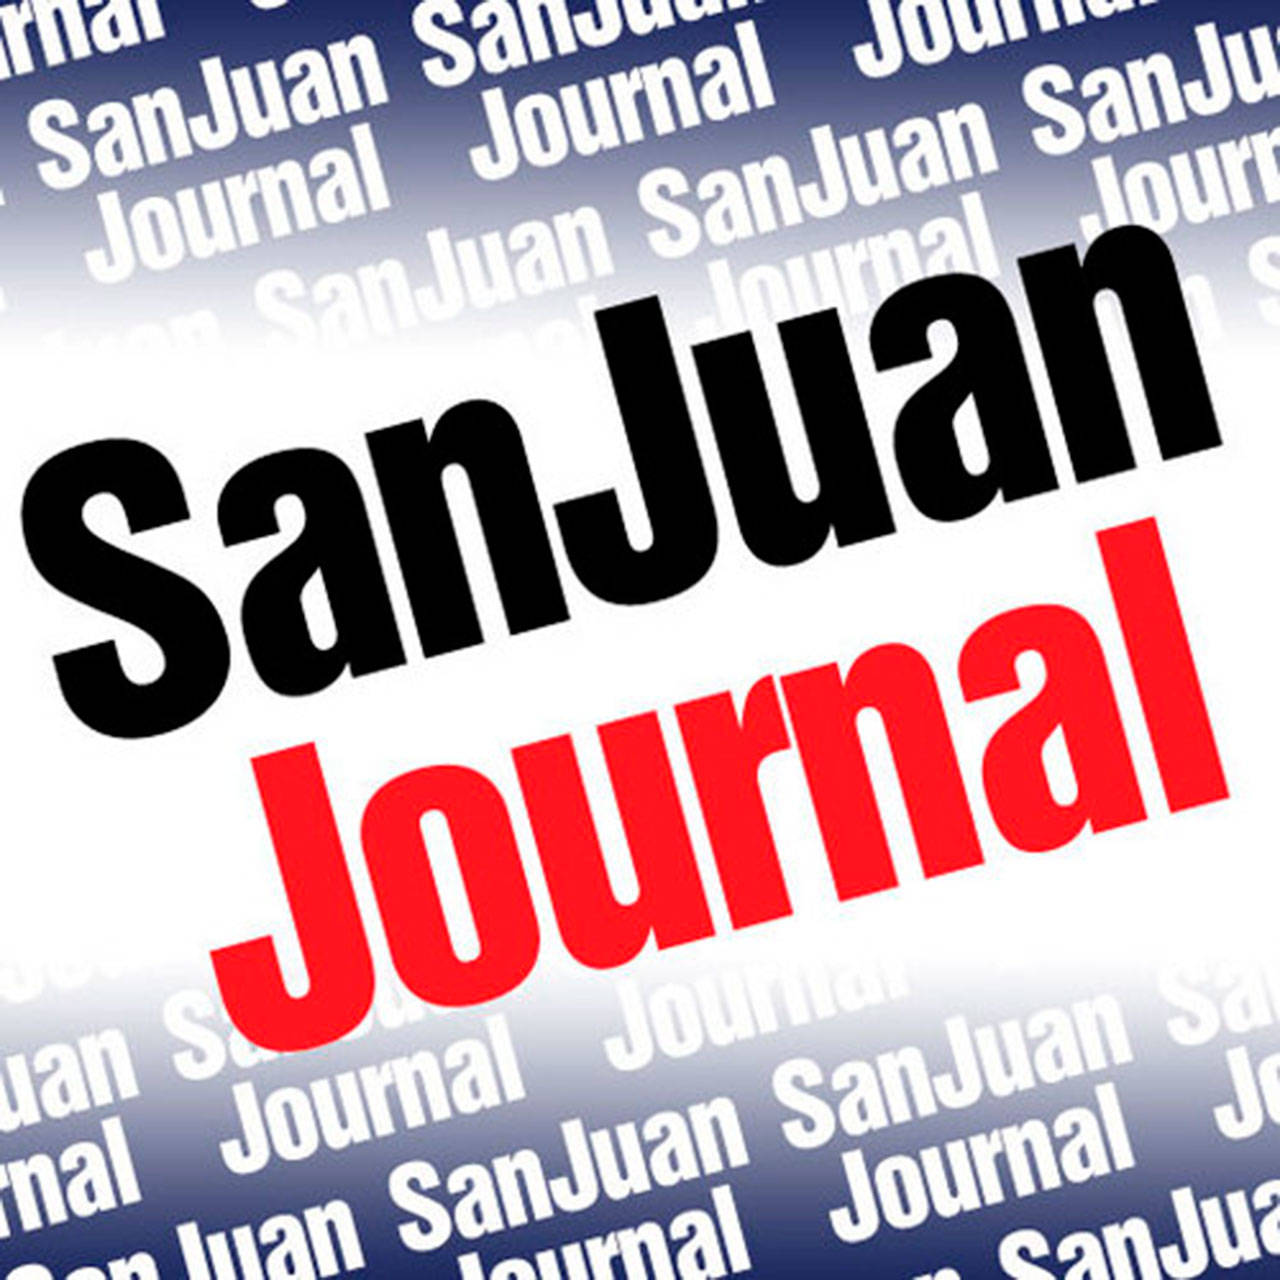 Help end poverty on San Juan | Editorial